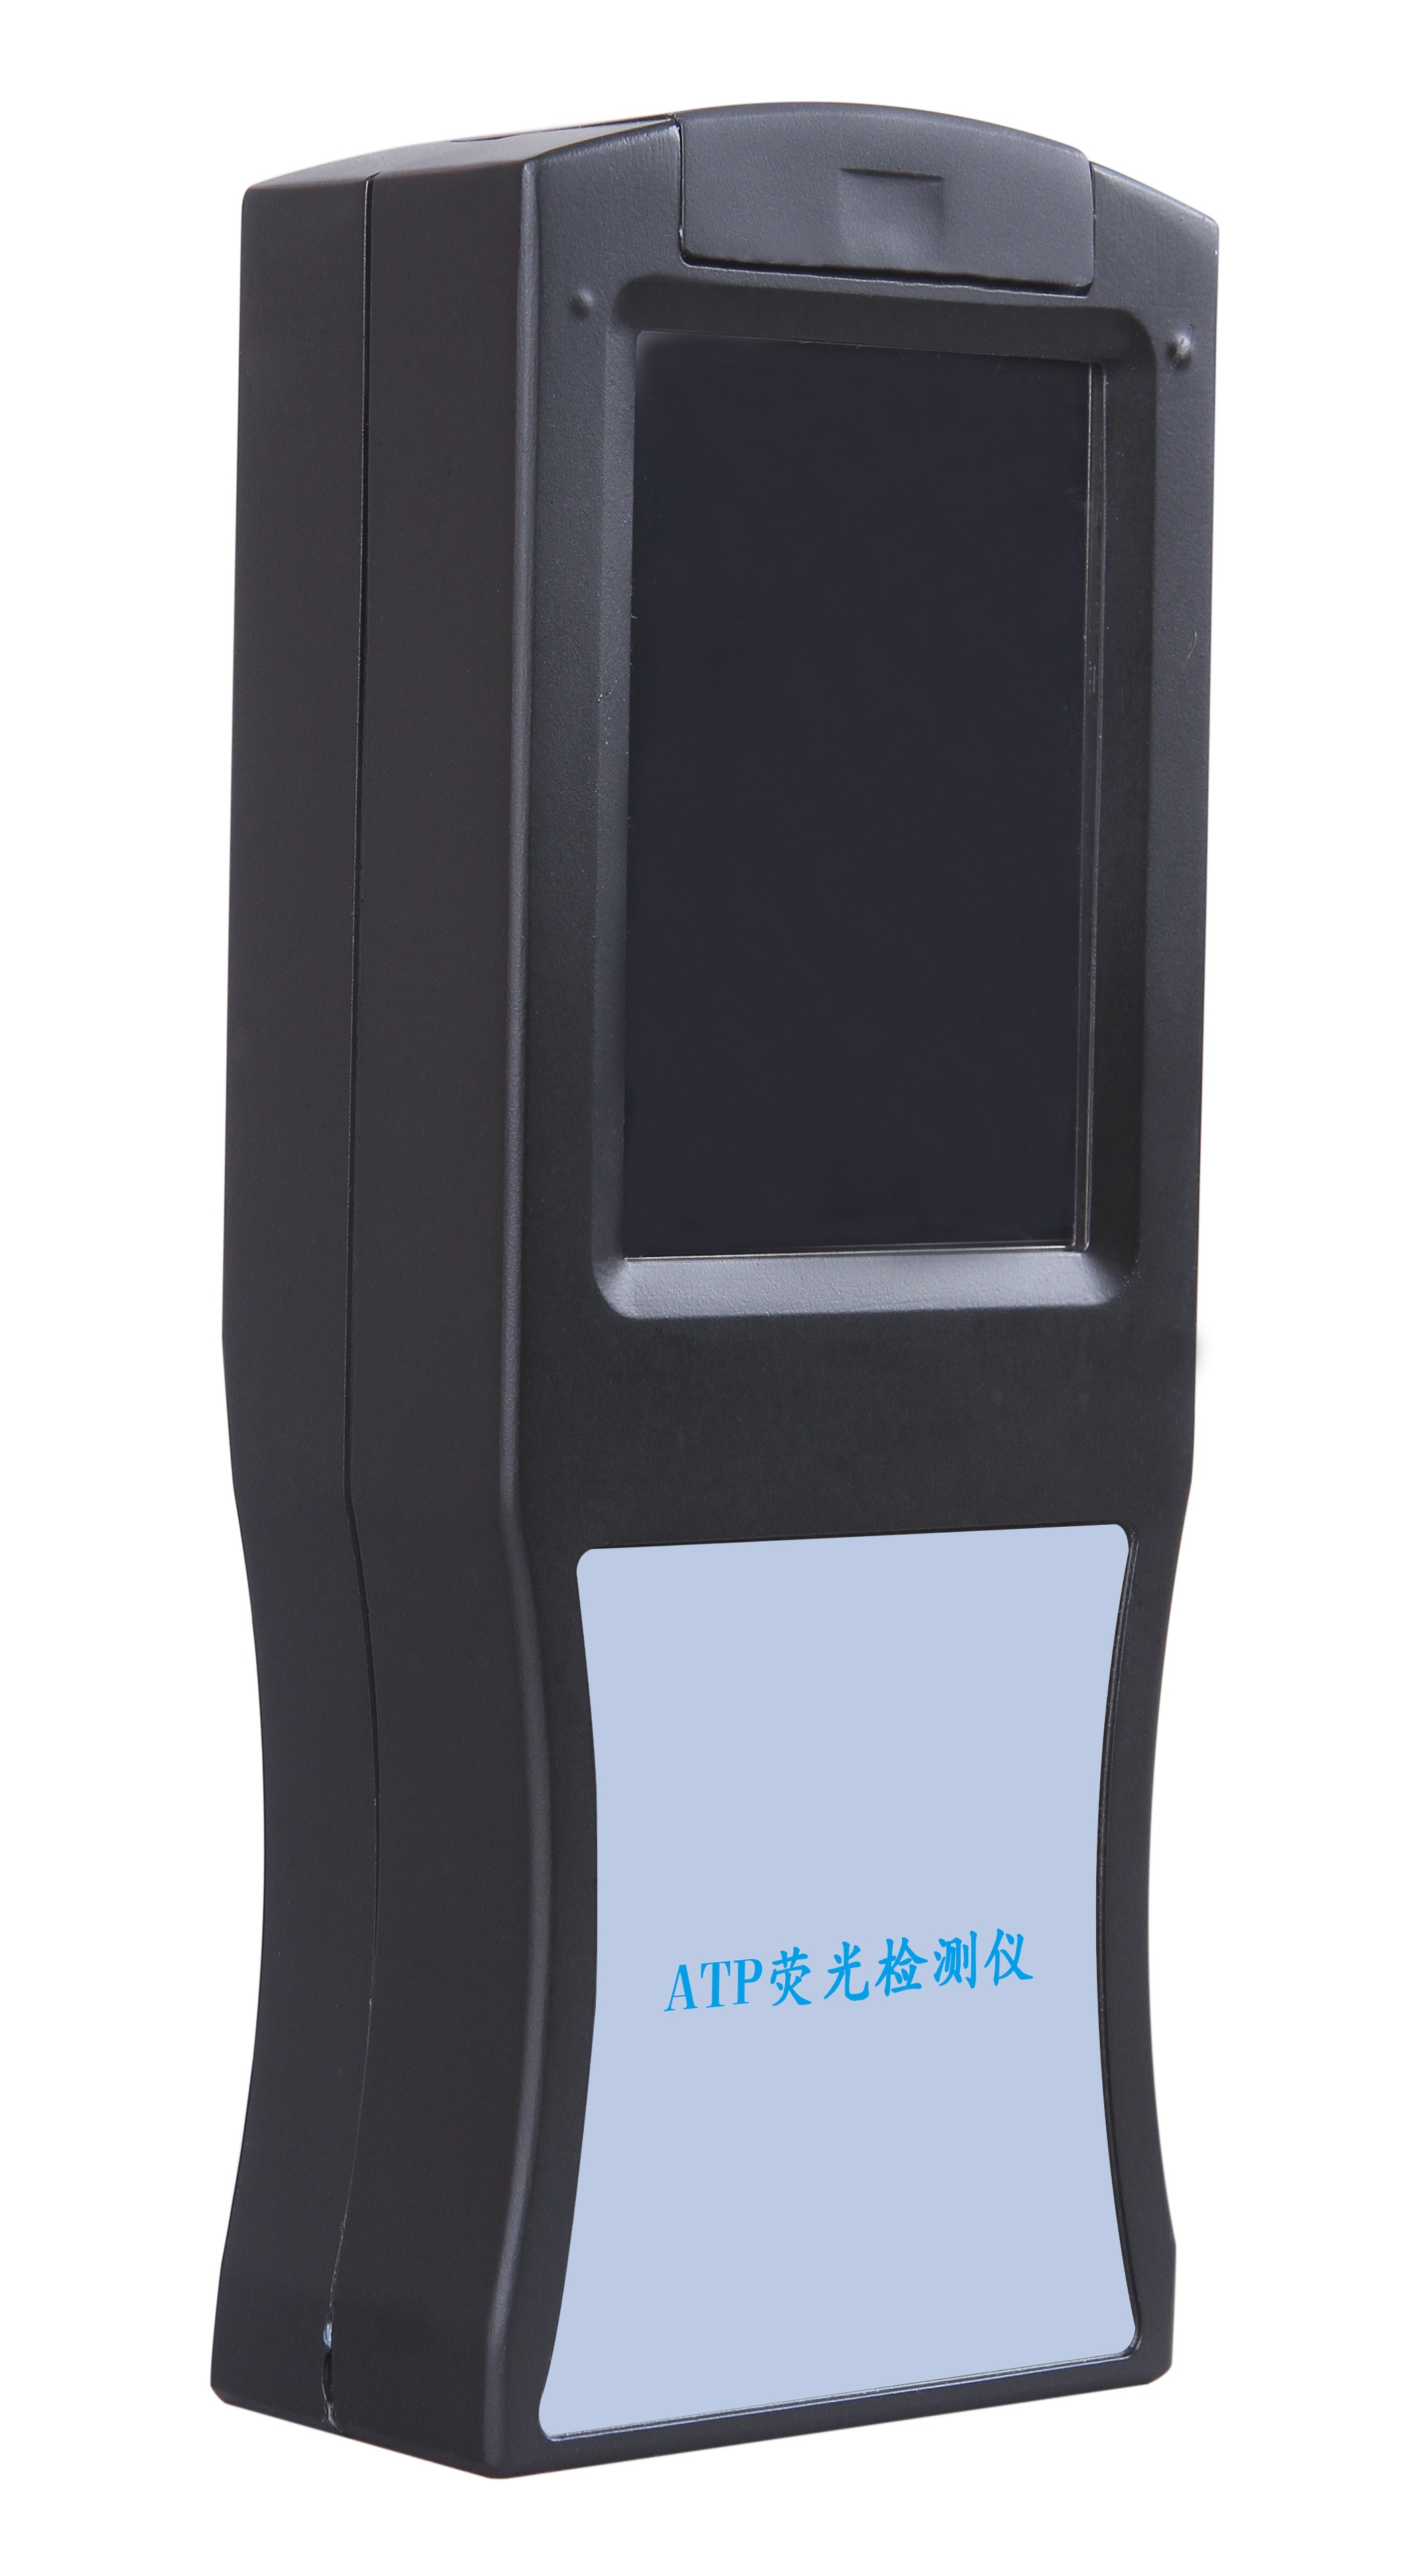 atp荧光检测仪价格是多少深圳市芬析仪器制造有限公司